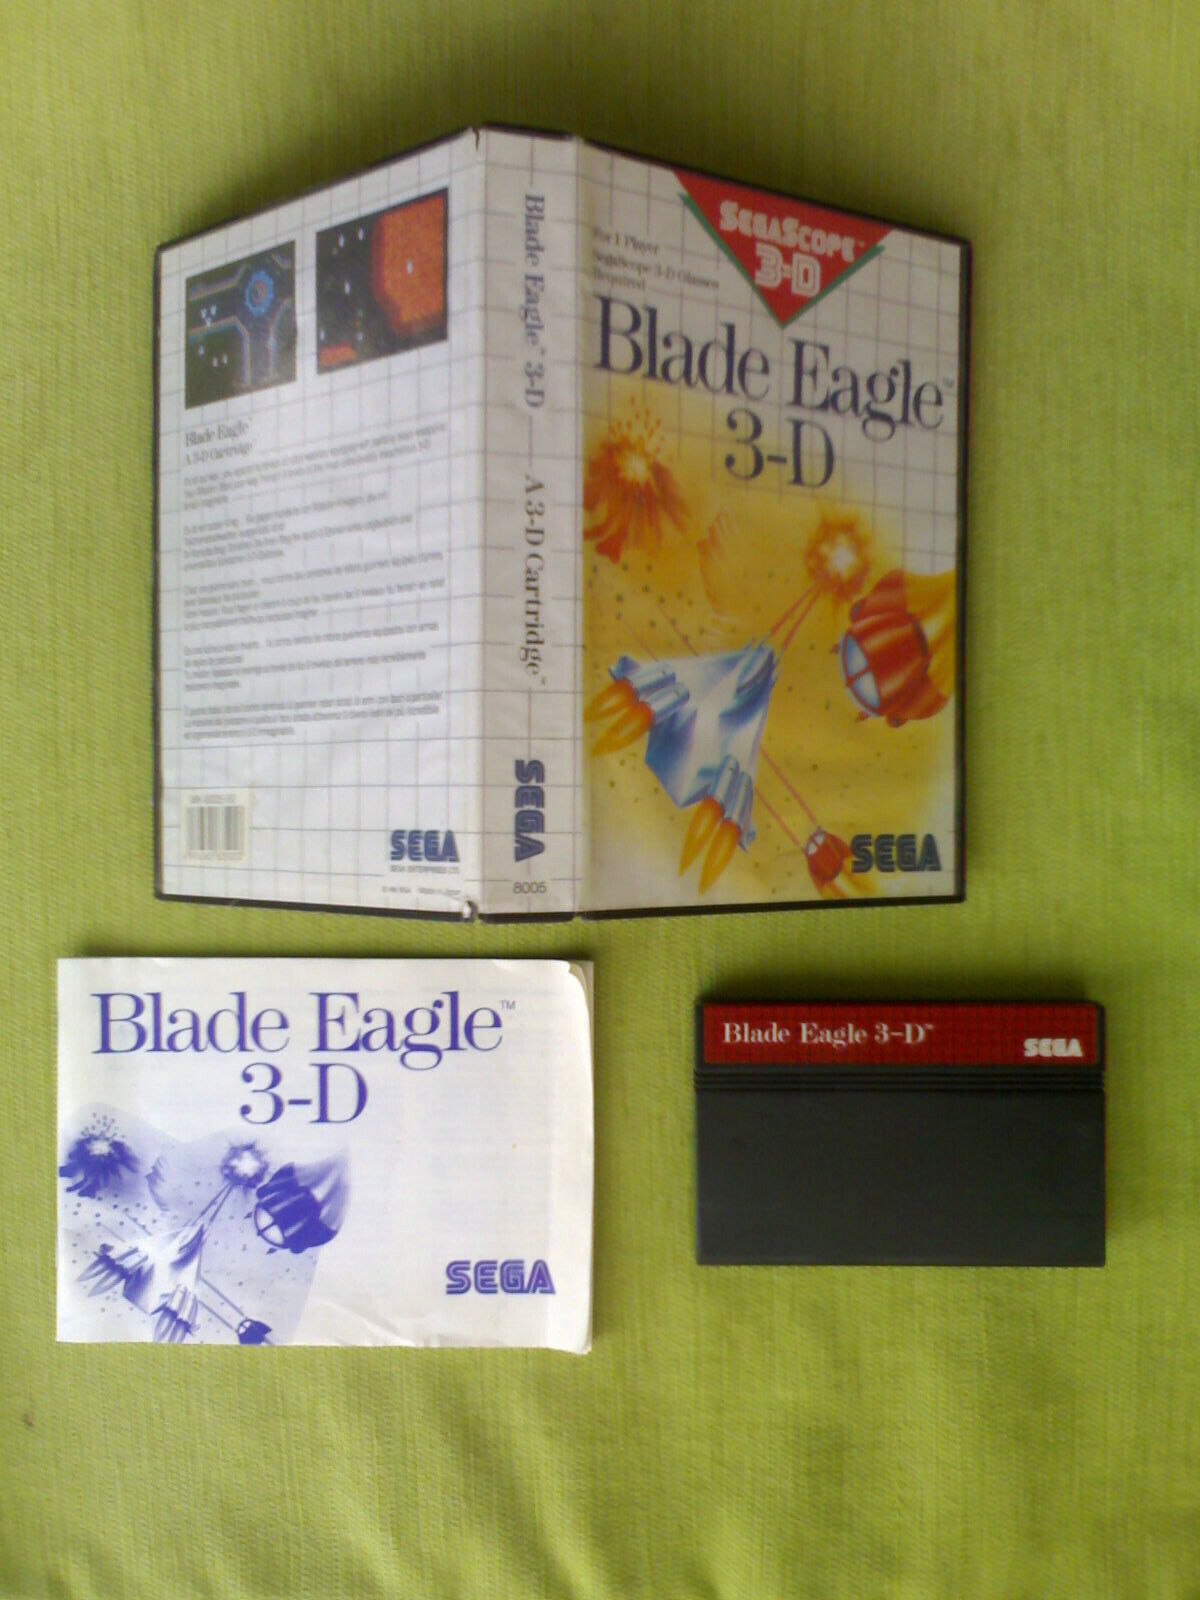 Videojuegos BLADE EAGLE 3-D + G-LOC AIR BATTLE Sega Master System SMS MS